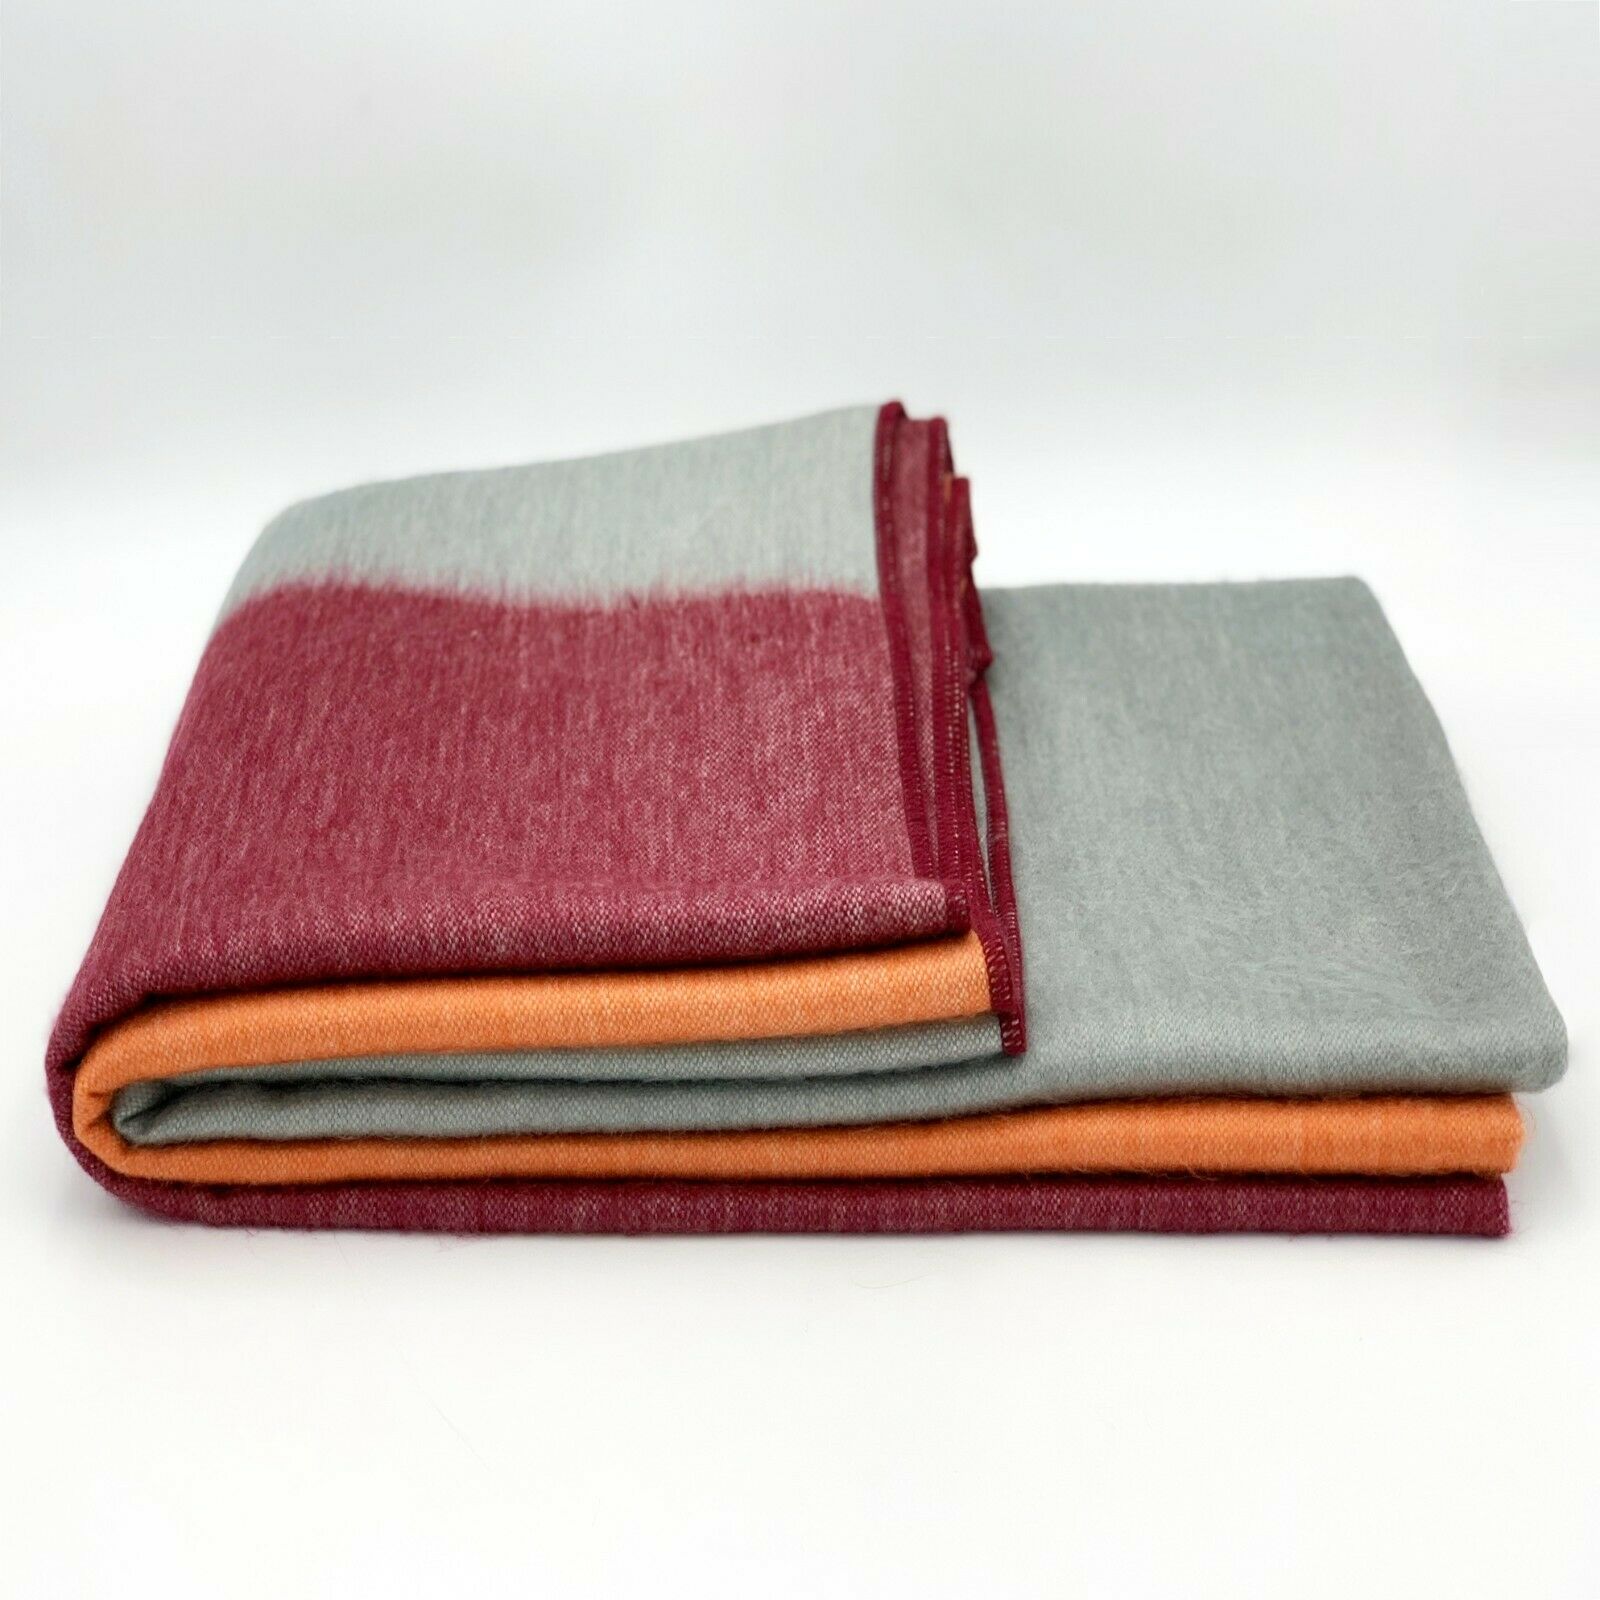 Cuchihuasi - Baby Alpaca Wool Throw Blanket / Sofa Cover - Queen 98" x 63" - Burgundy/Gray/Orange